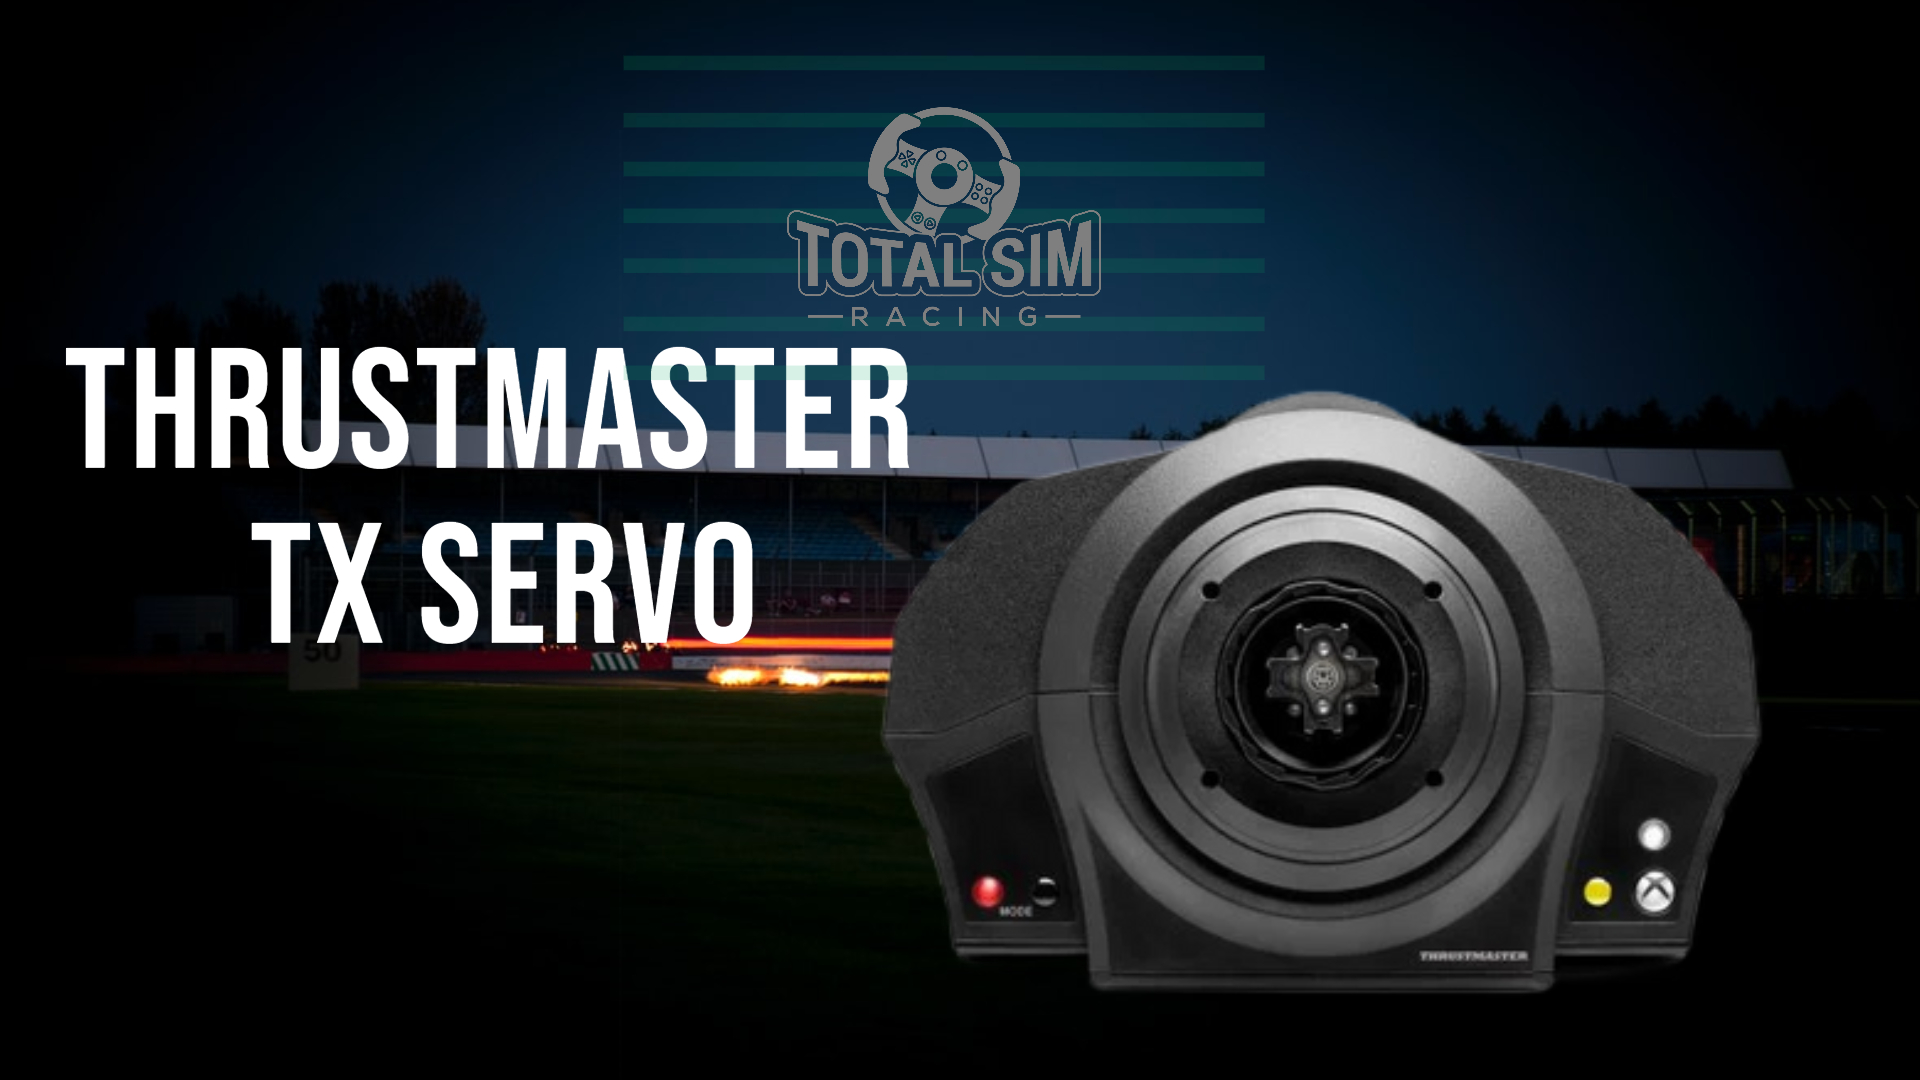 Thrustmaster TX Servo Base Review